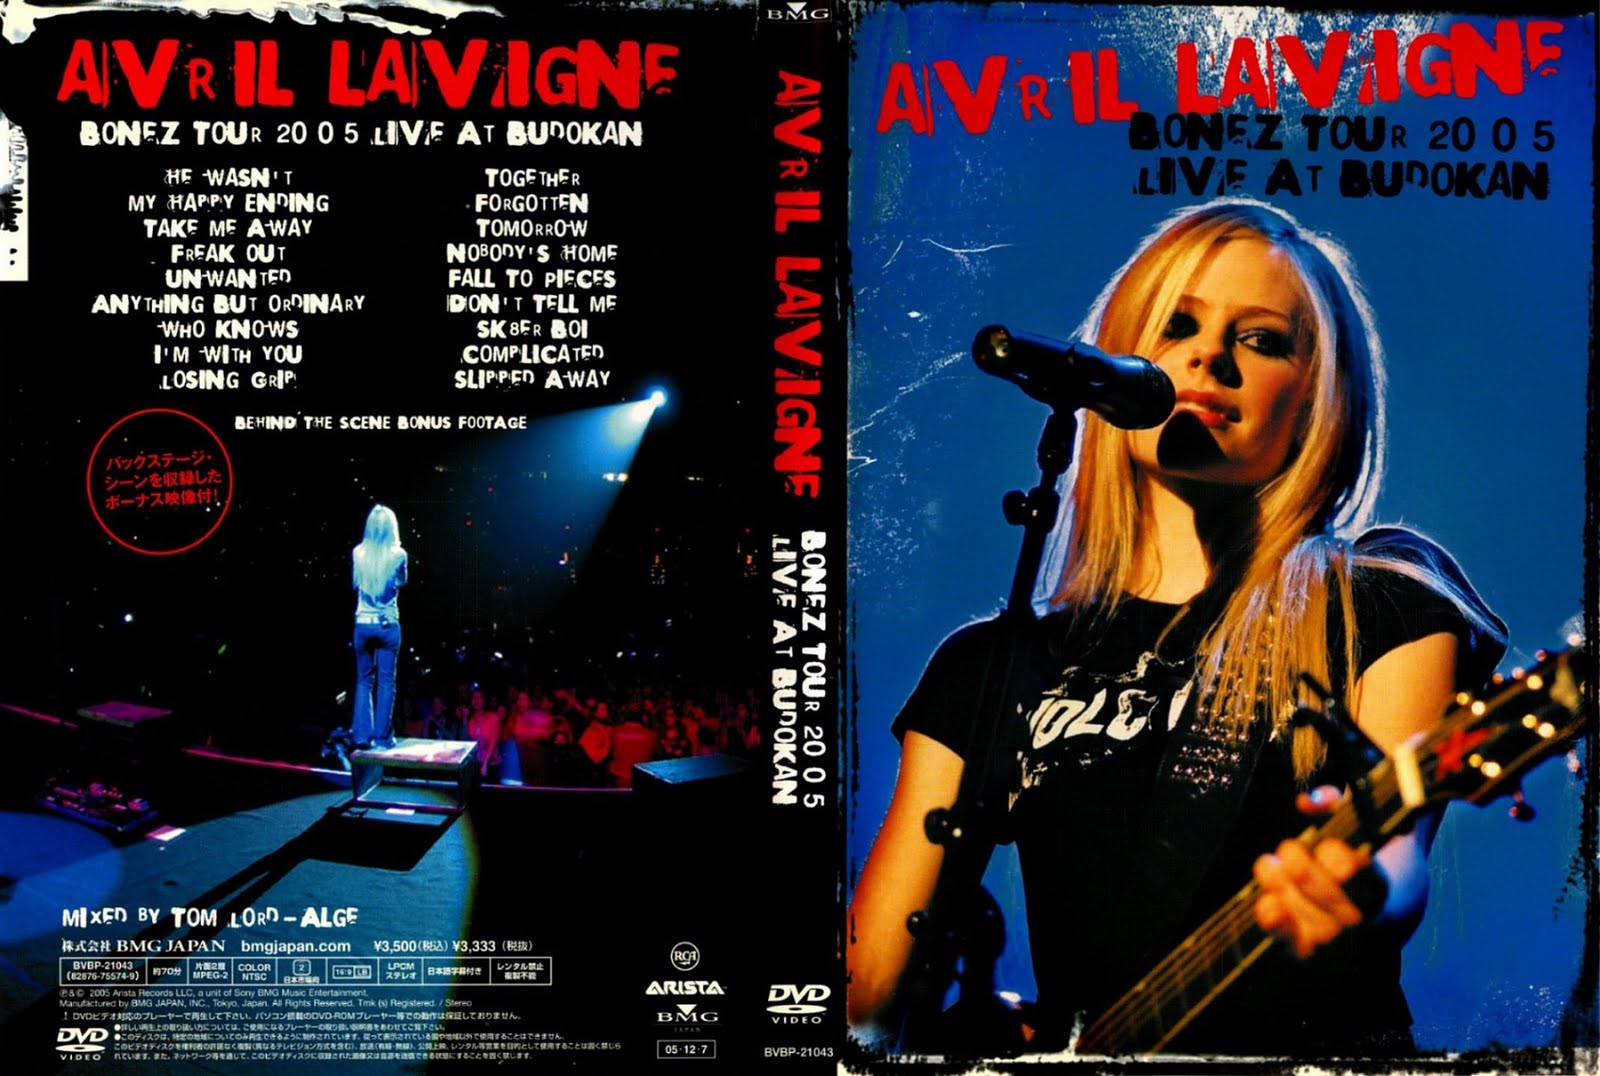 http://3.bp.blogspot.com/_d2izdxAUXNA/TCtQNypeZkI/AAAAAAAAAeU/_bK2bfKIFxQ/s1600/Avril_Lavigne-Bonez_Tour_2005_Live_At_Budokan_%28Dvd%29-Caratula.jpg